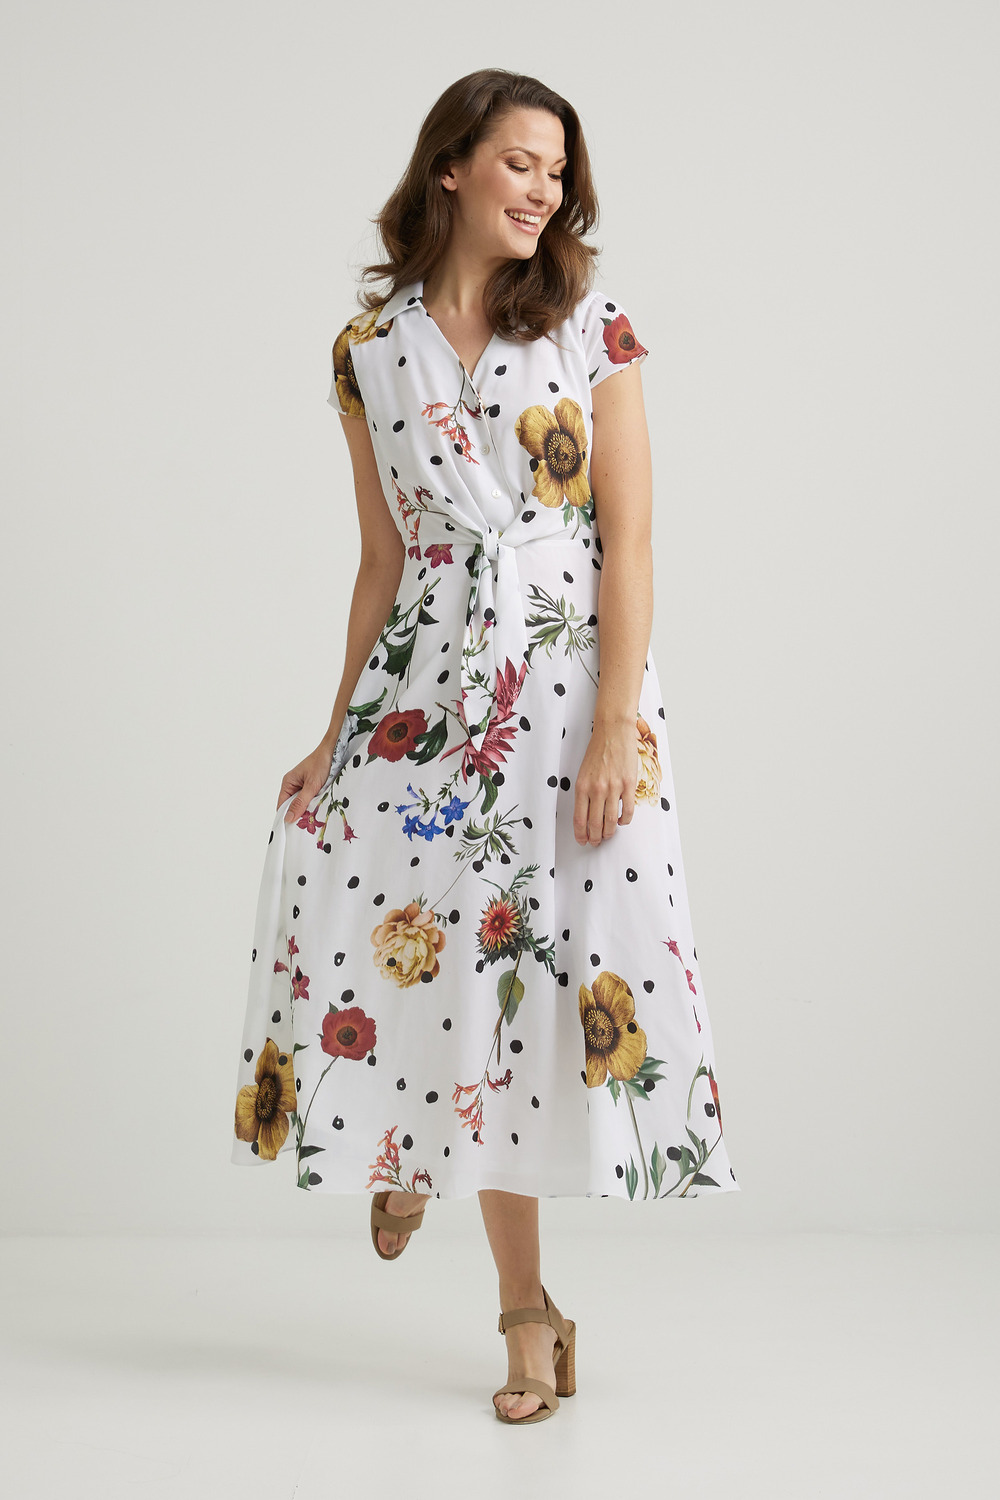 Joseph Ribkoff Floral Fit & Flare Dress Style 222216. Vanilla/multi